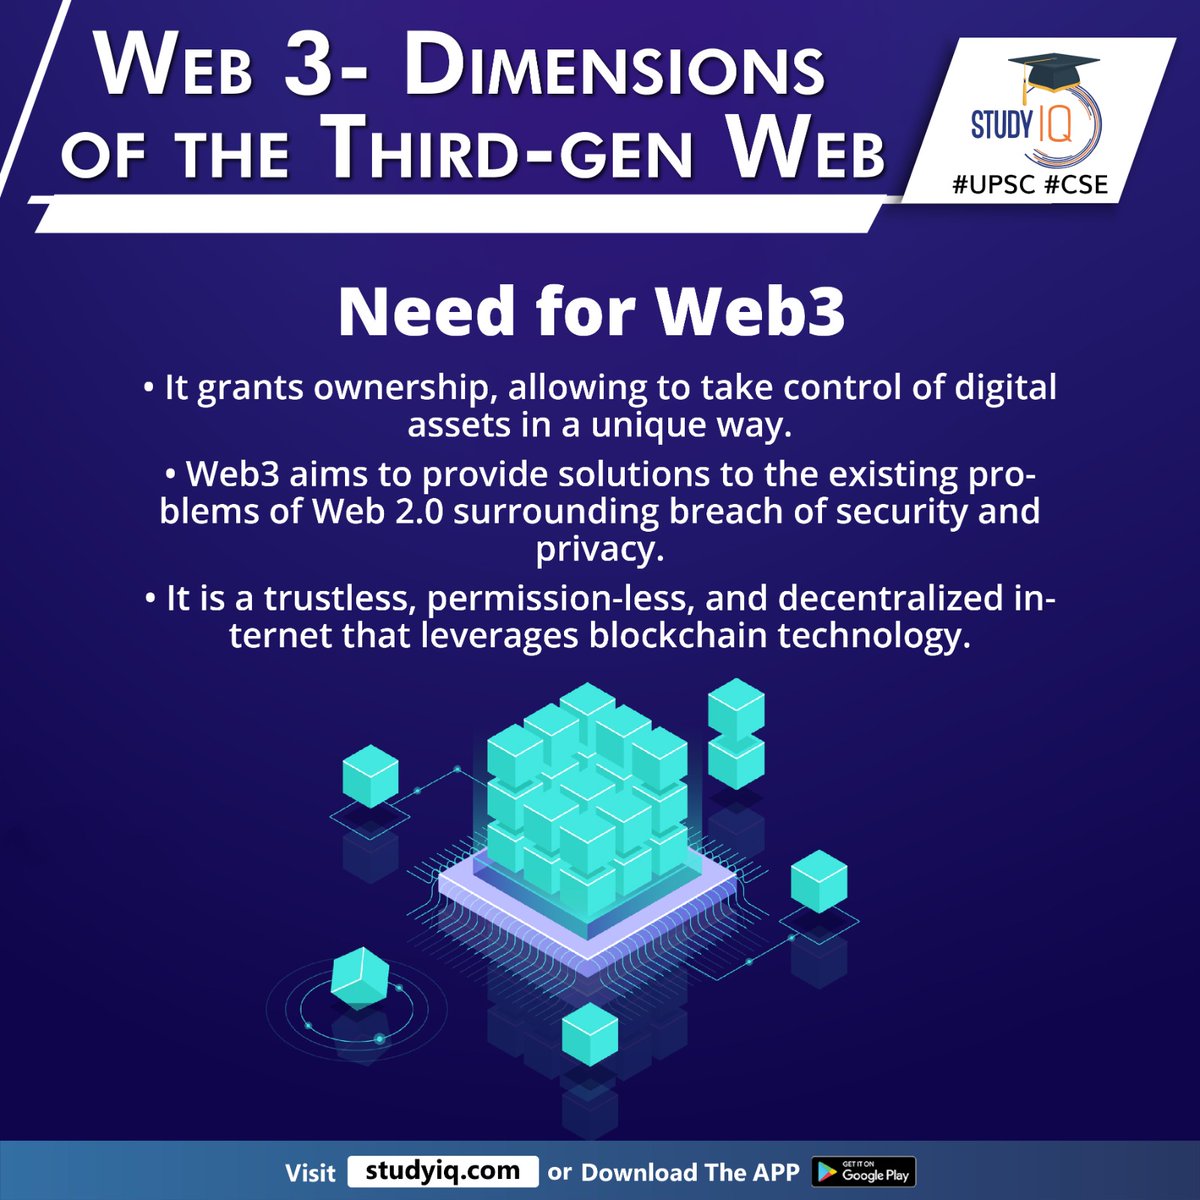 WEB 3 - Dimensions of The Third-Gen Web

#web3 #dimensionsofthirdgenweb #thirdgenweb #digitalasset #internetdevelopment #humans #decentralization #data #bigtechcompanies #personaldata #payments #security #privacy #blockchaintechnology #upsc #cse #ips #ias